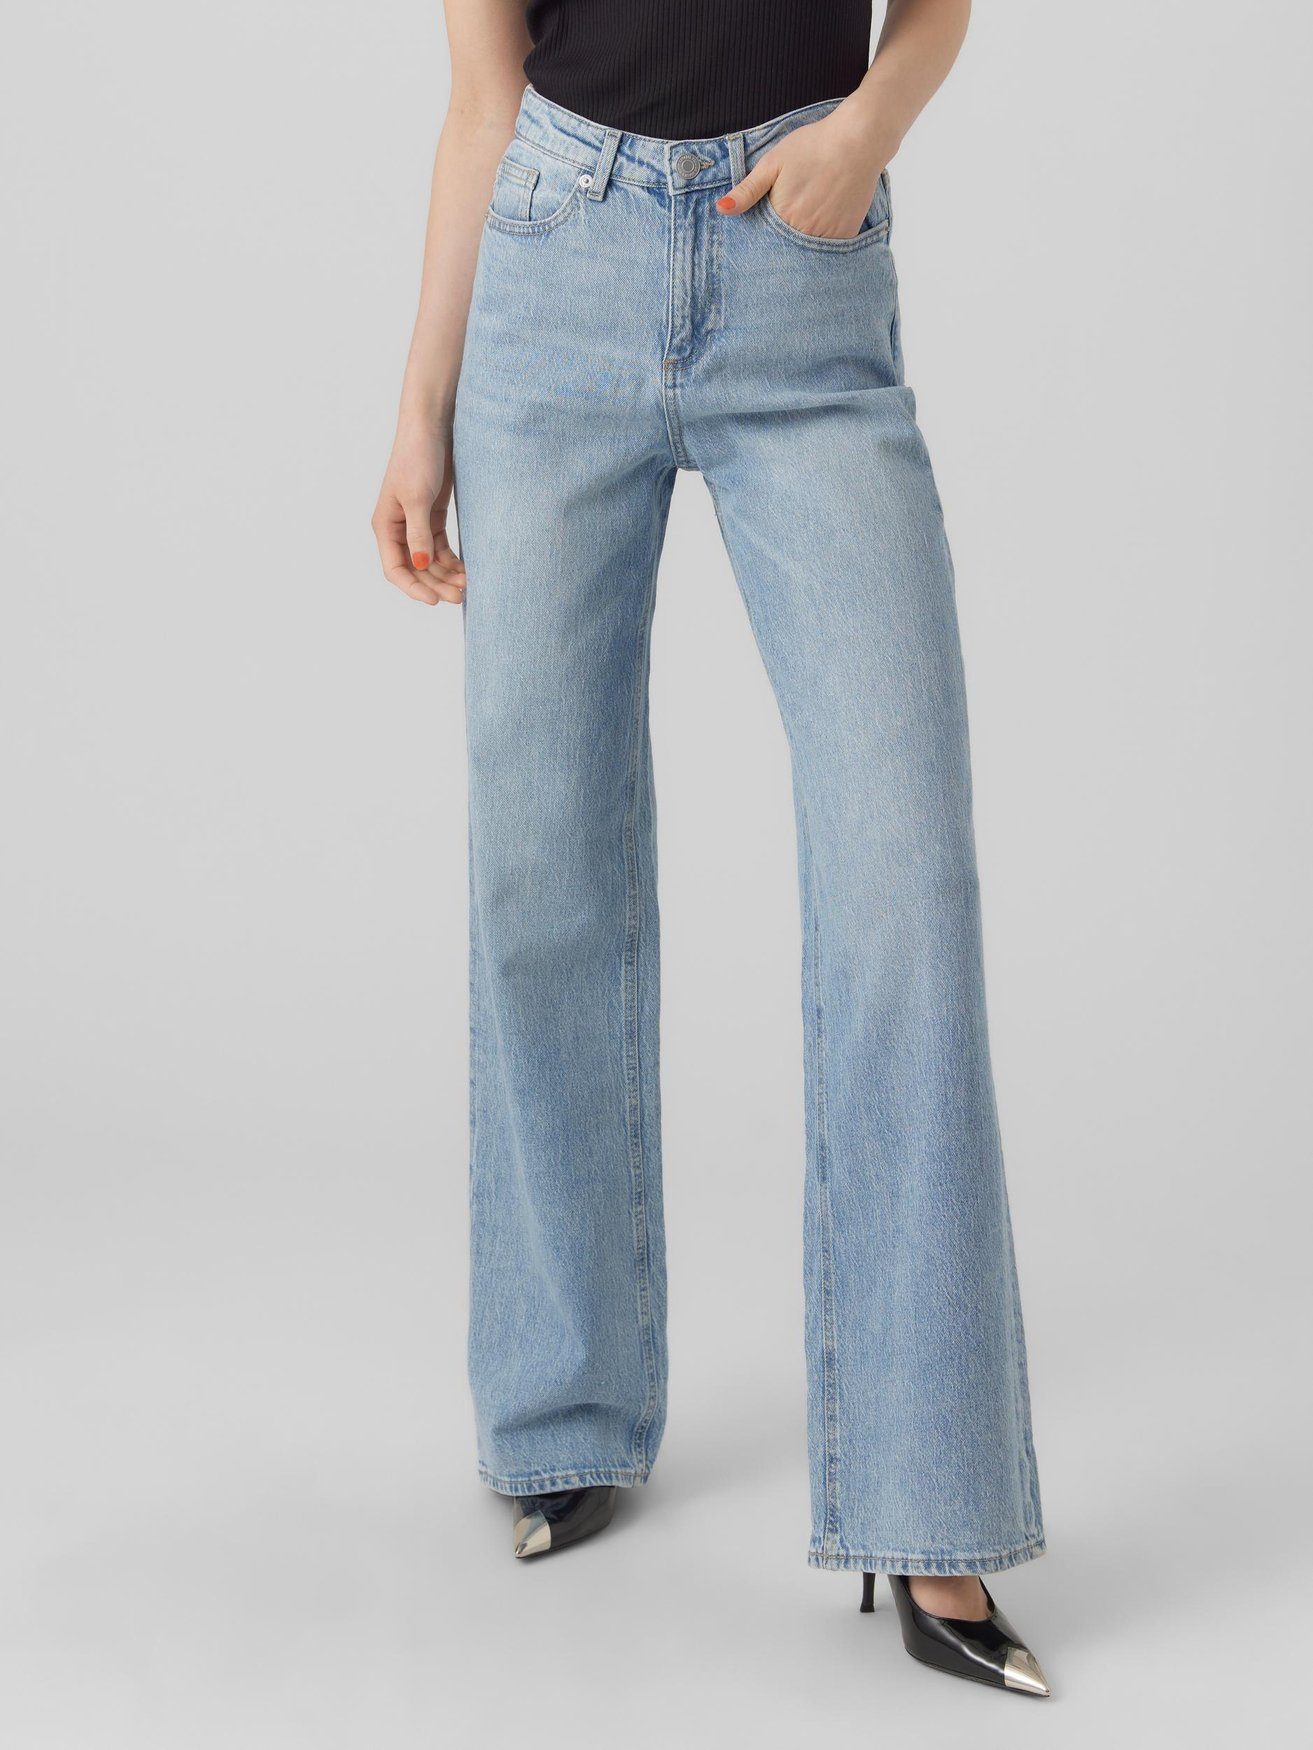 Jeans Washed in Stone Vero Moda 5973 Hellblau Denim Fit Straight Schlagjeans VMTESSA